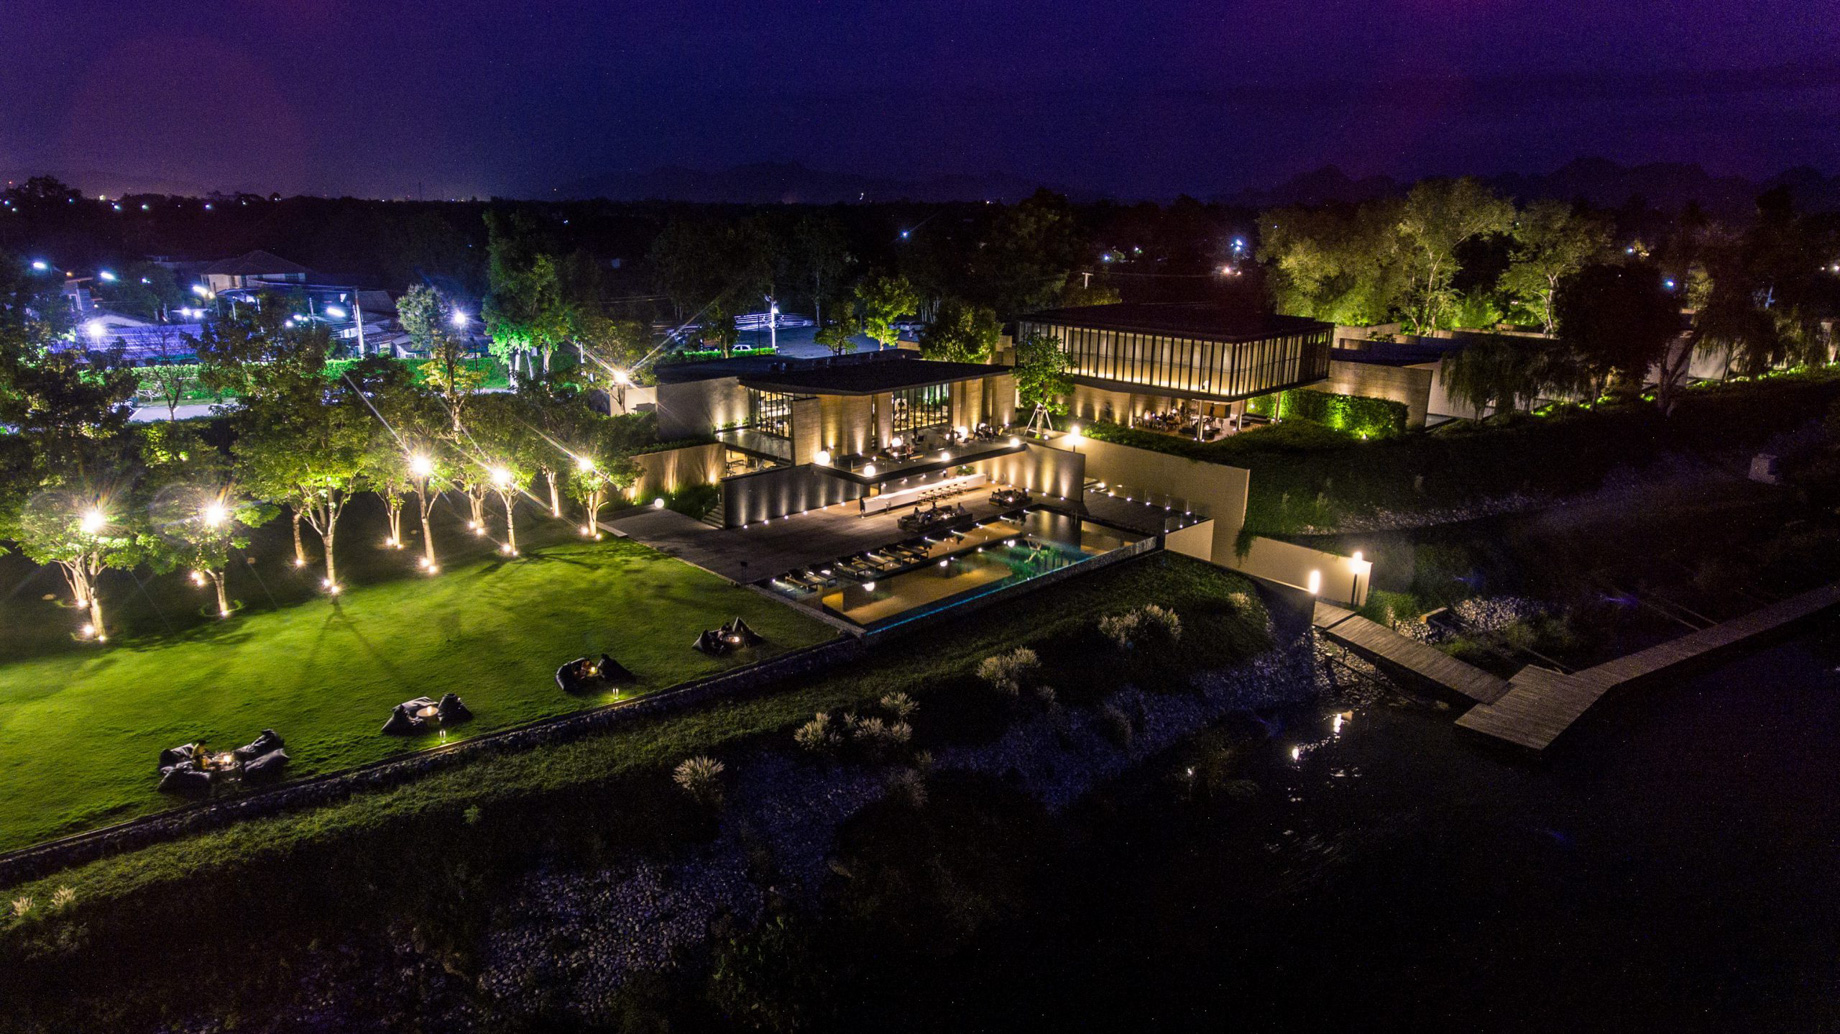 Tara Villa Riverkwai Resort - Kanchanaburi, Thailand - Exterior Aerial Night View